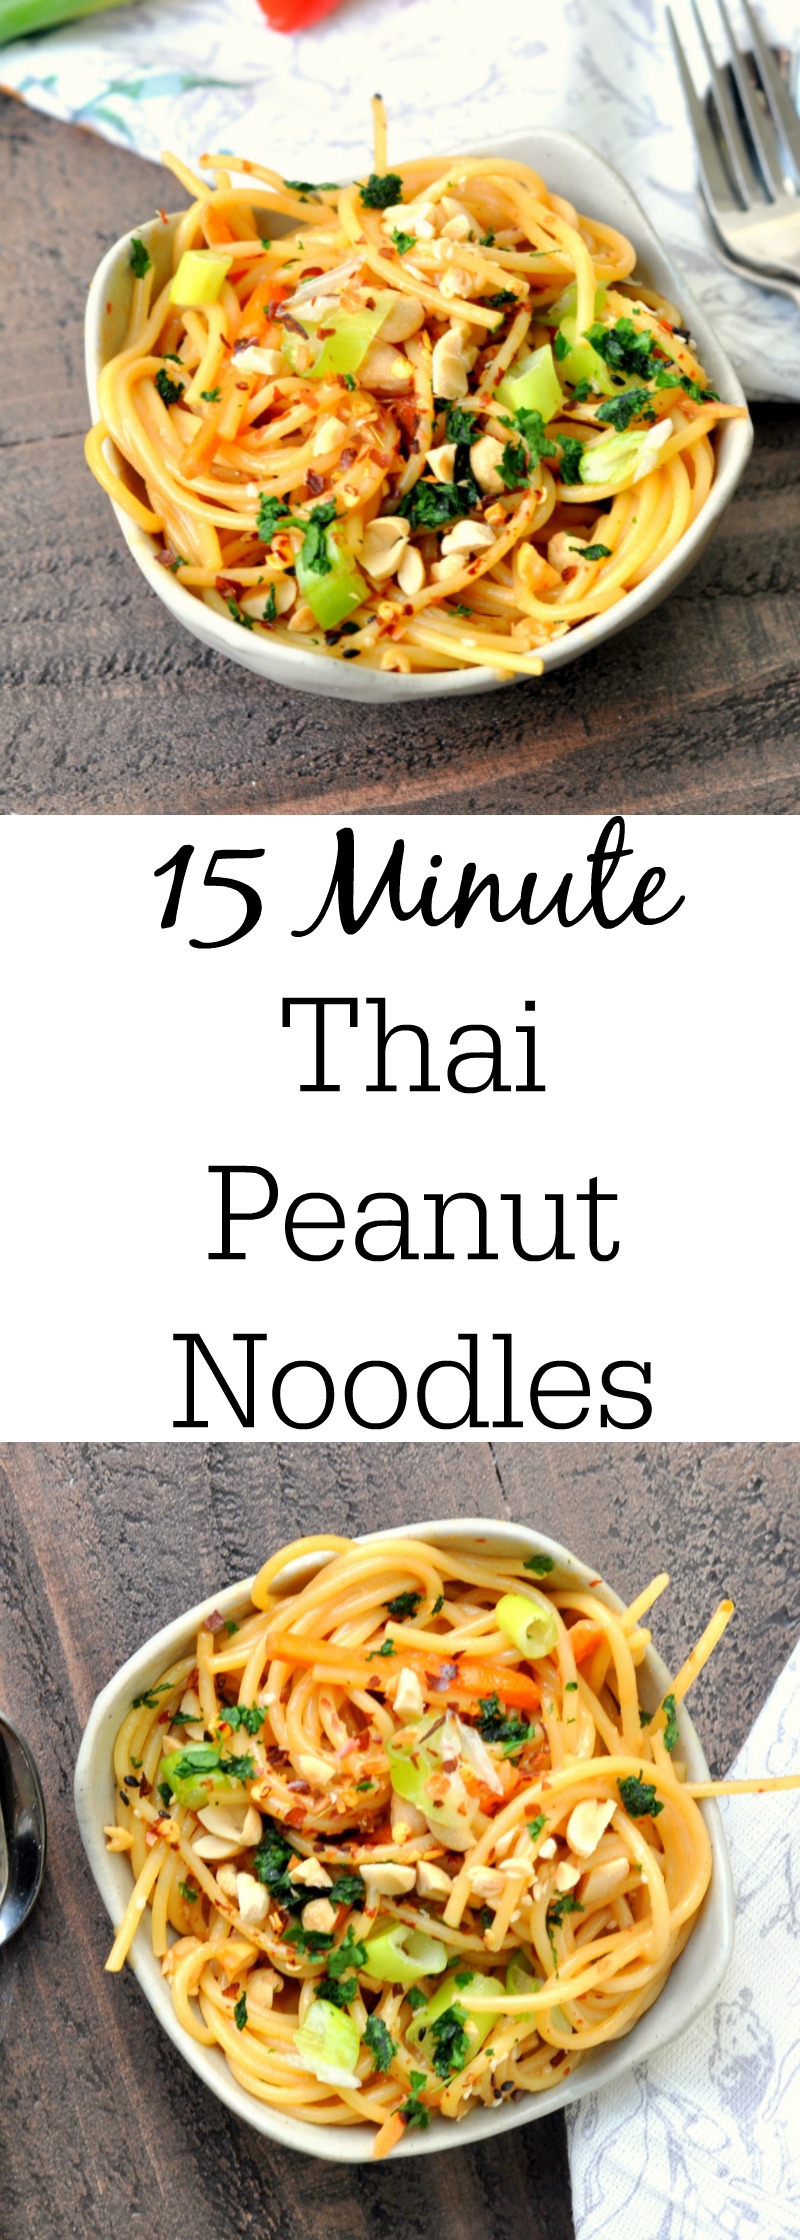 15 Minute Thai Peanut Noodles